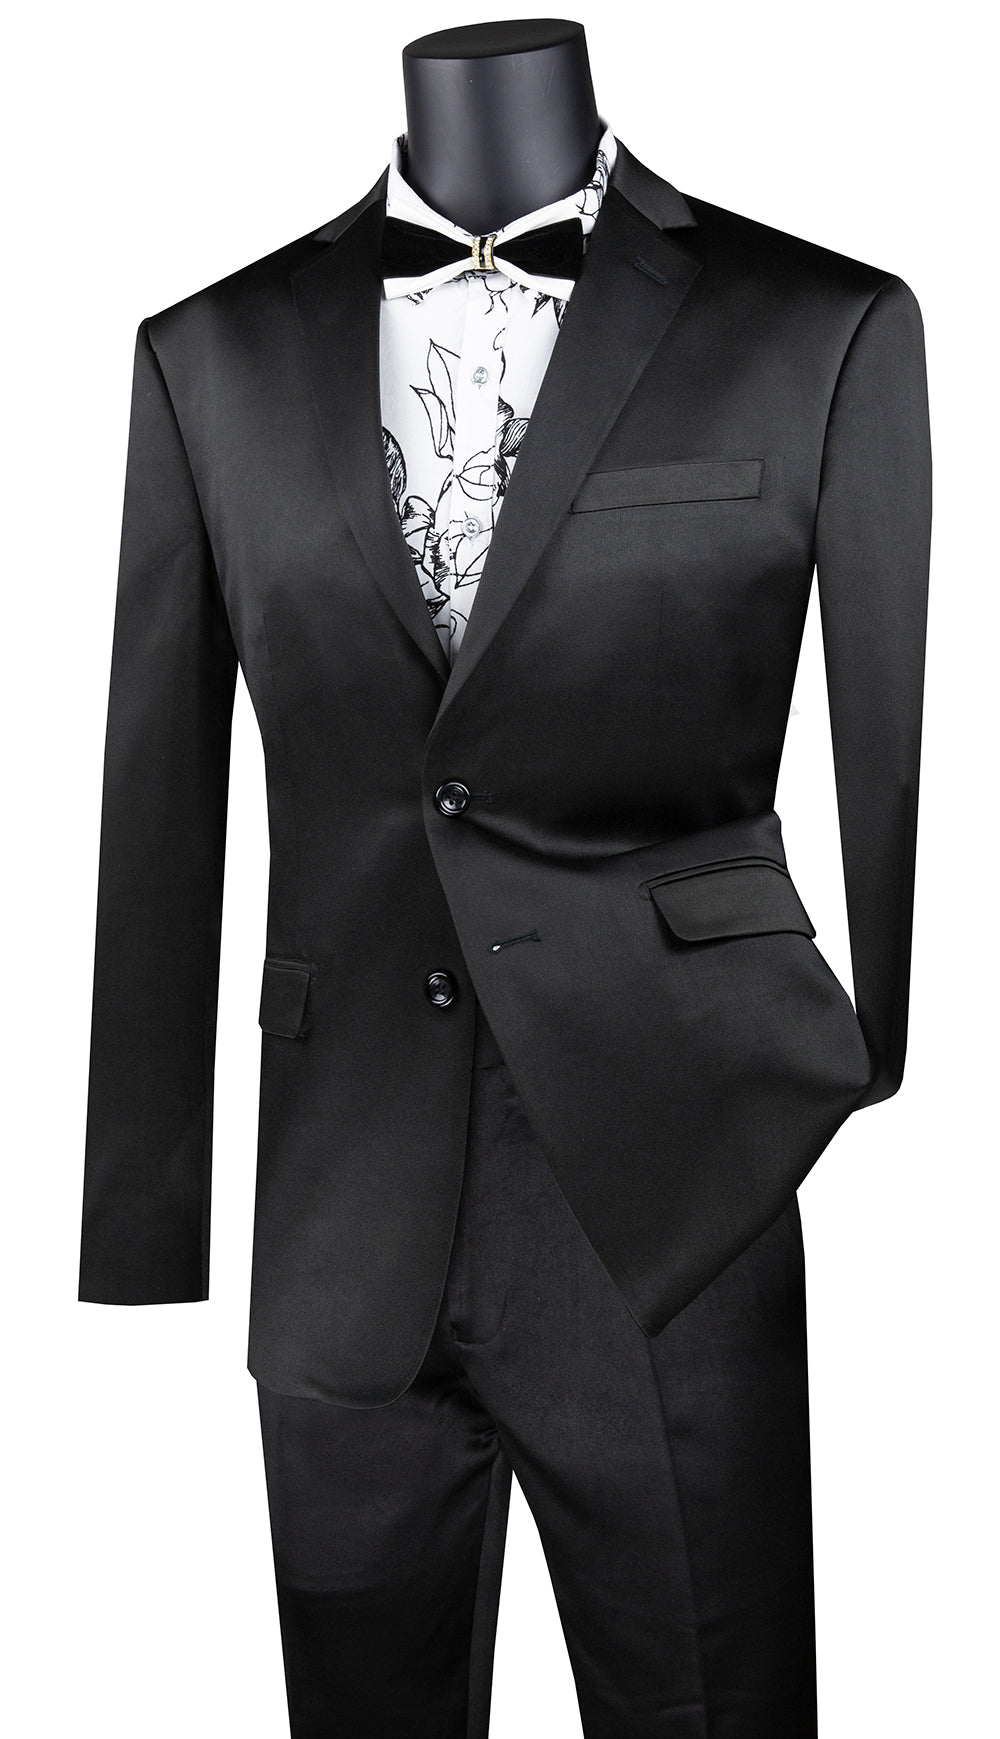 Vinci Sport Jacket UST-1-Black - Church Suits For Less